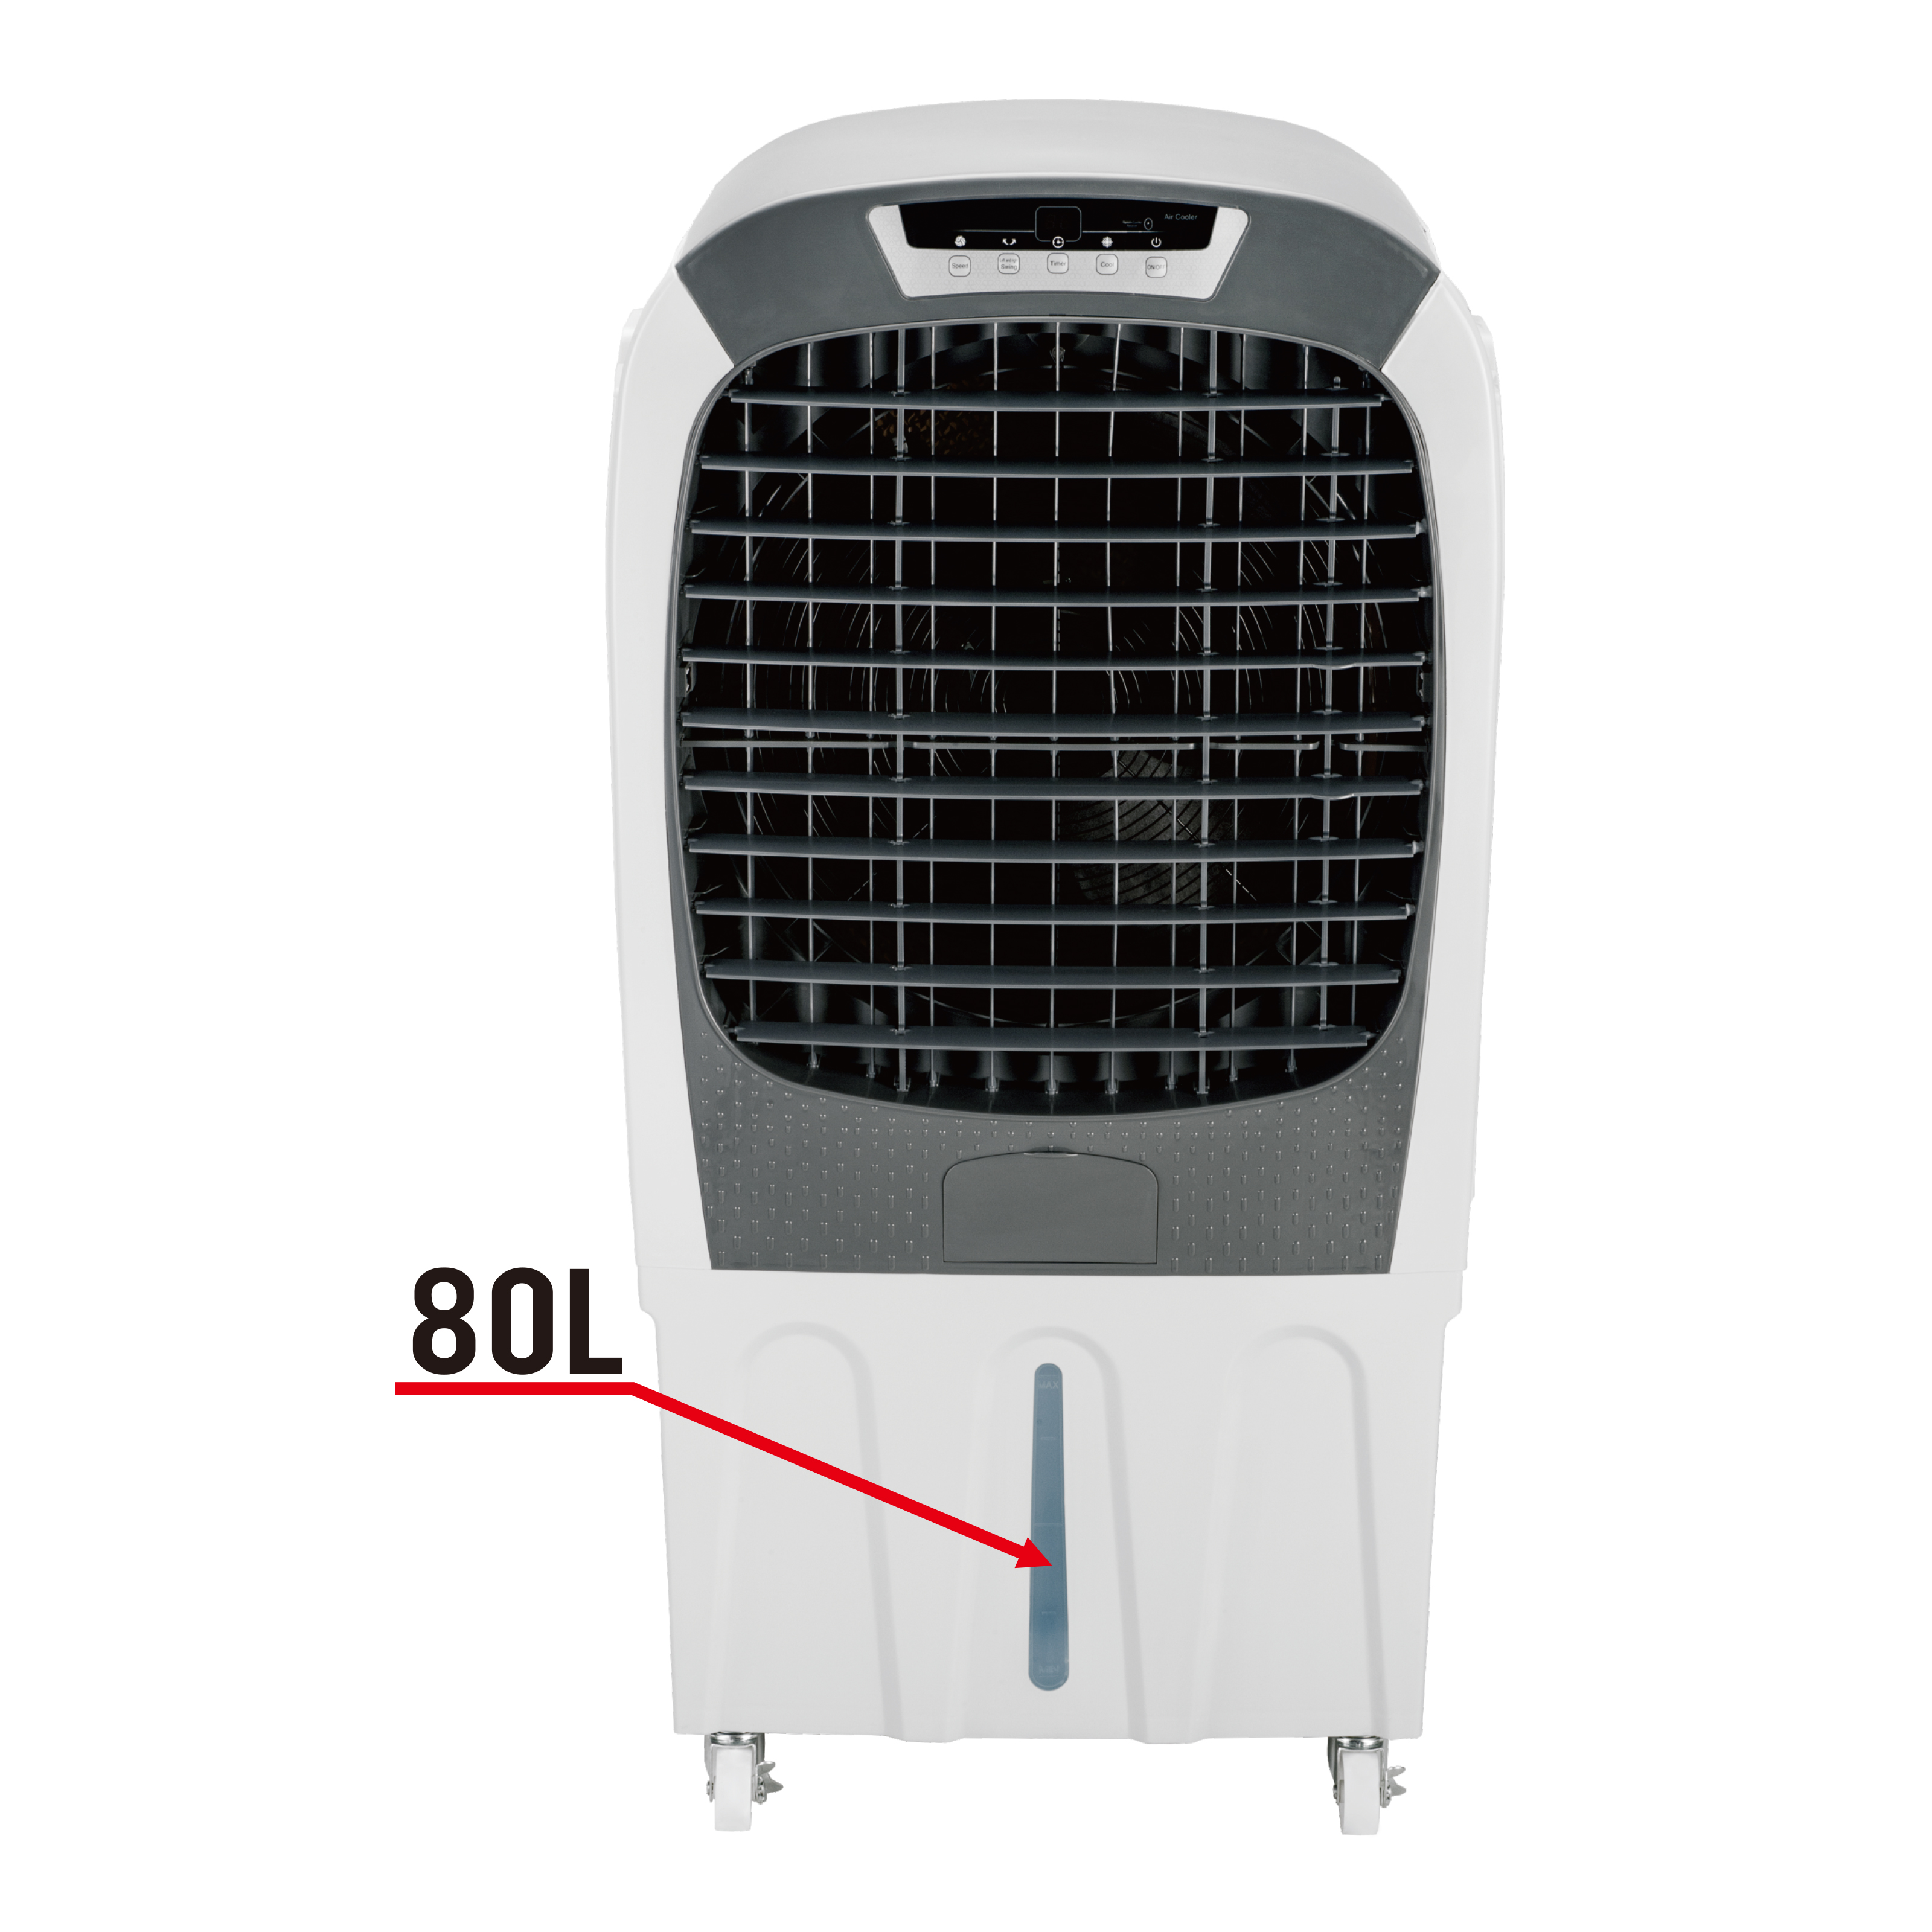 80L Outdoor-Fernbedienungs-Bodenstehender Verdunstungsluftkühler